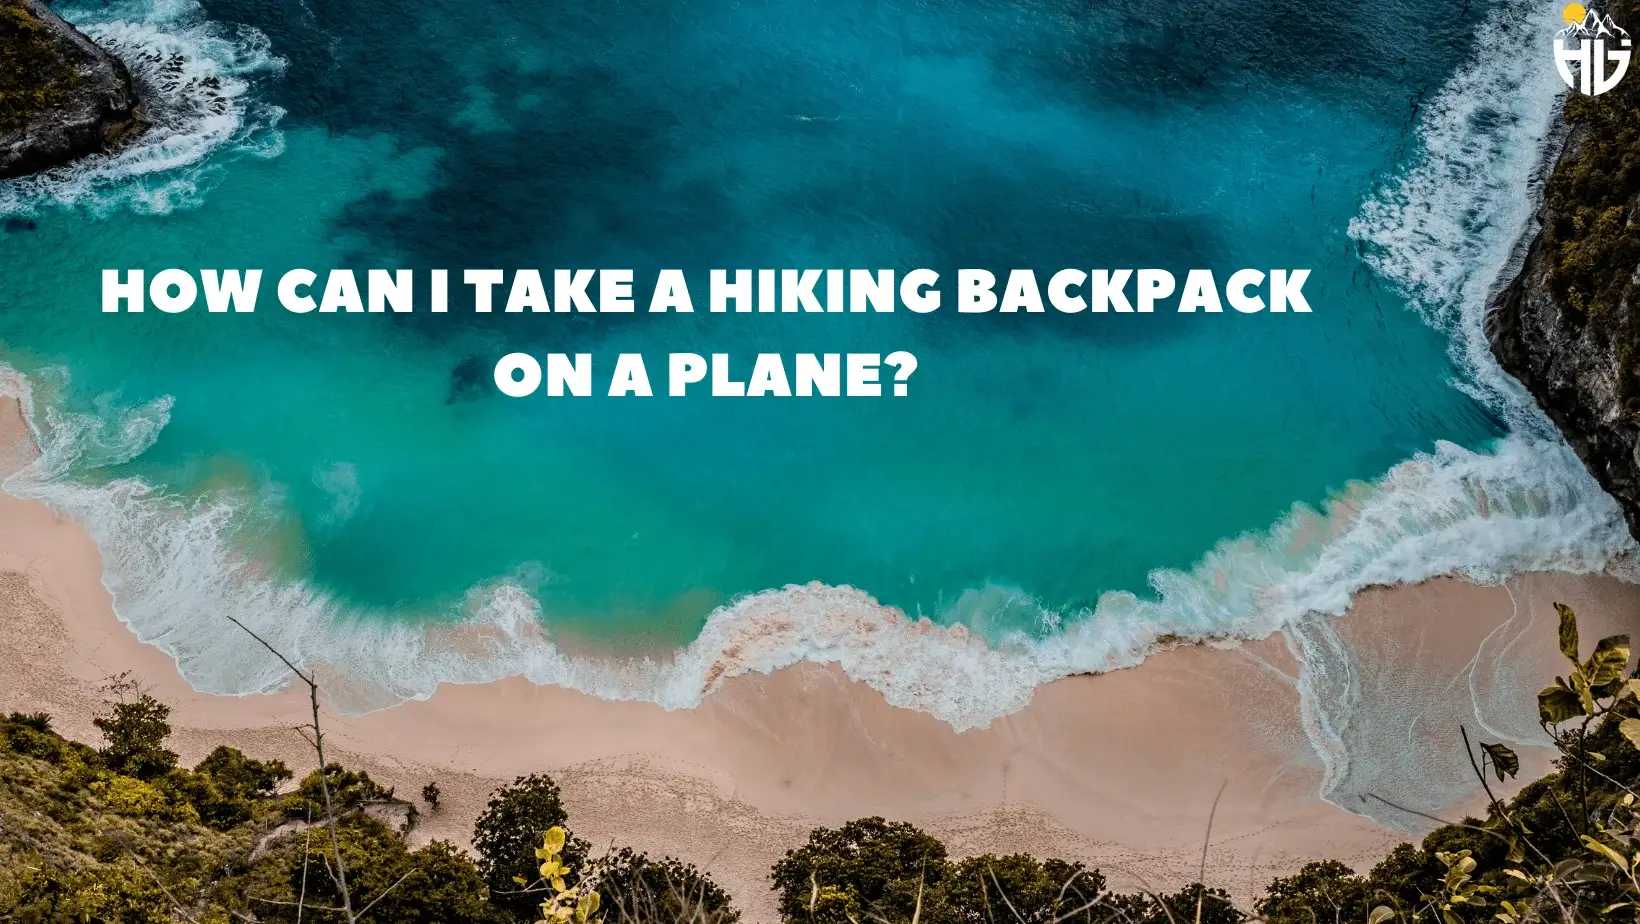 How Can I Take a Hiking Backpack on a Plane?